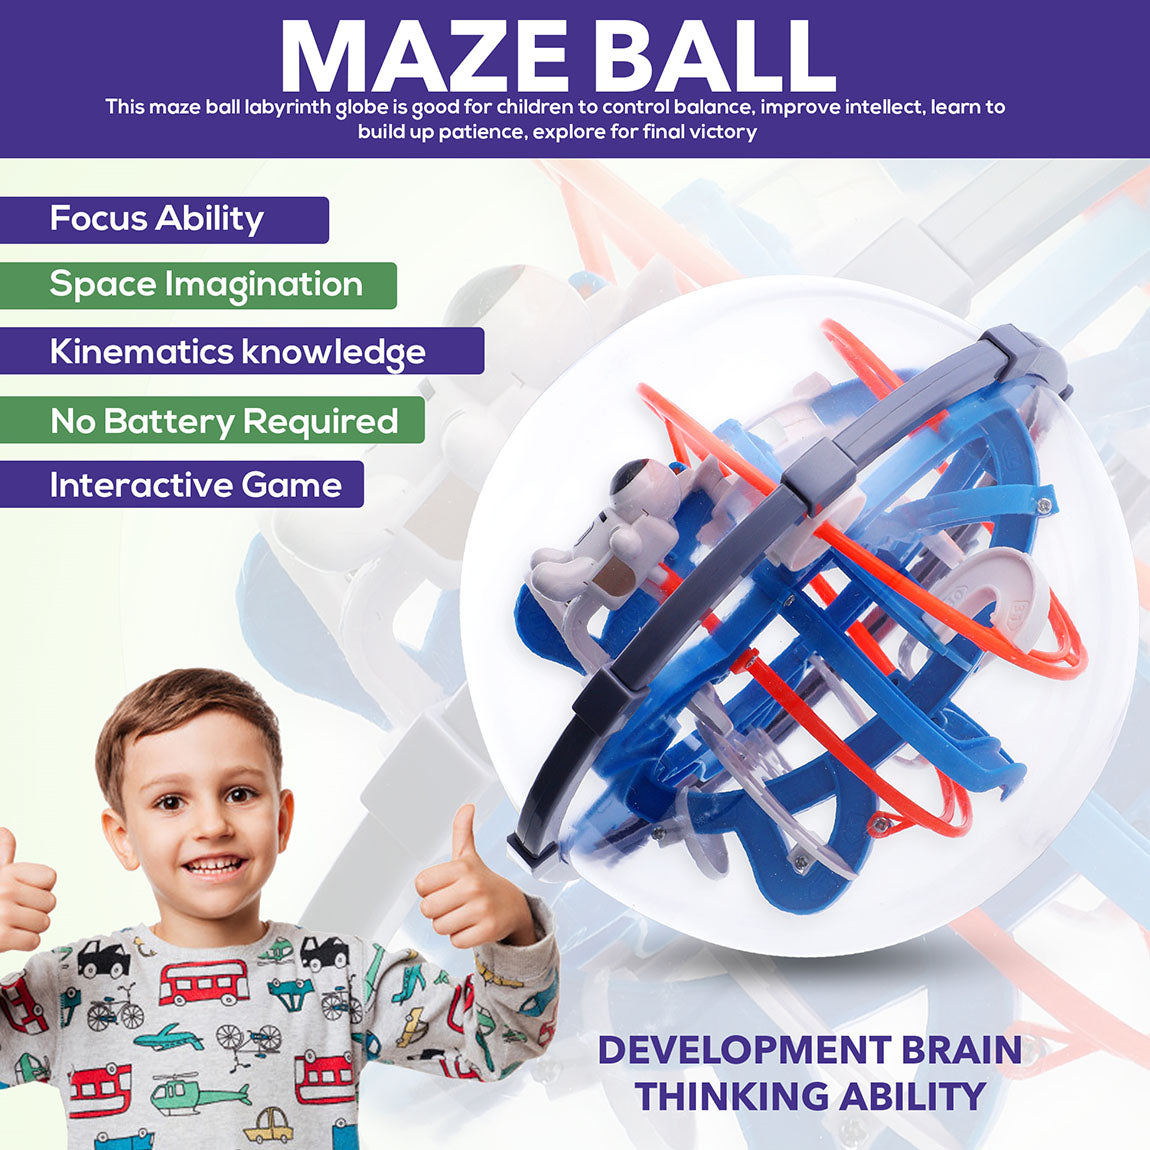 Perplexus Rebel 3D Maze Game Brain Teaser Gravity Puzzle Ball, Cool Stuff  Adult